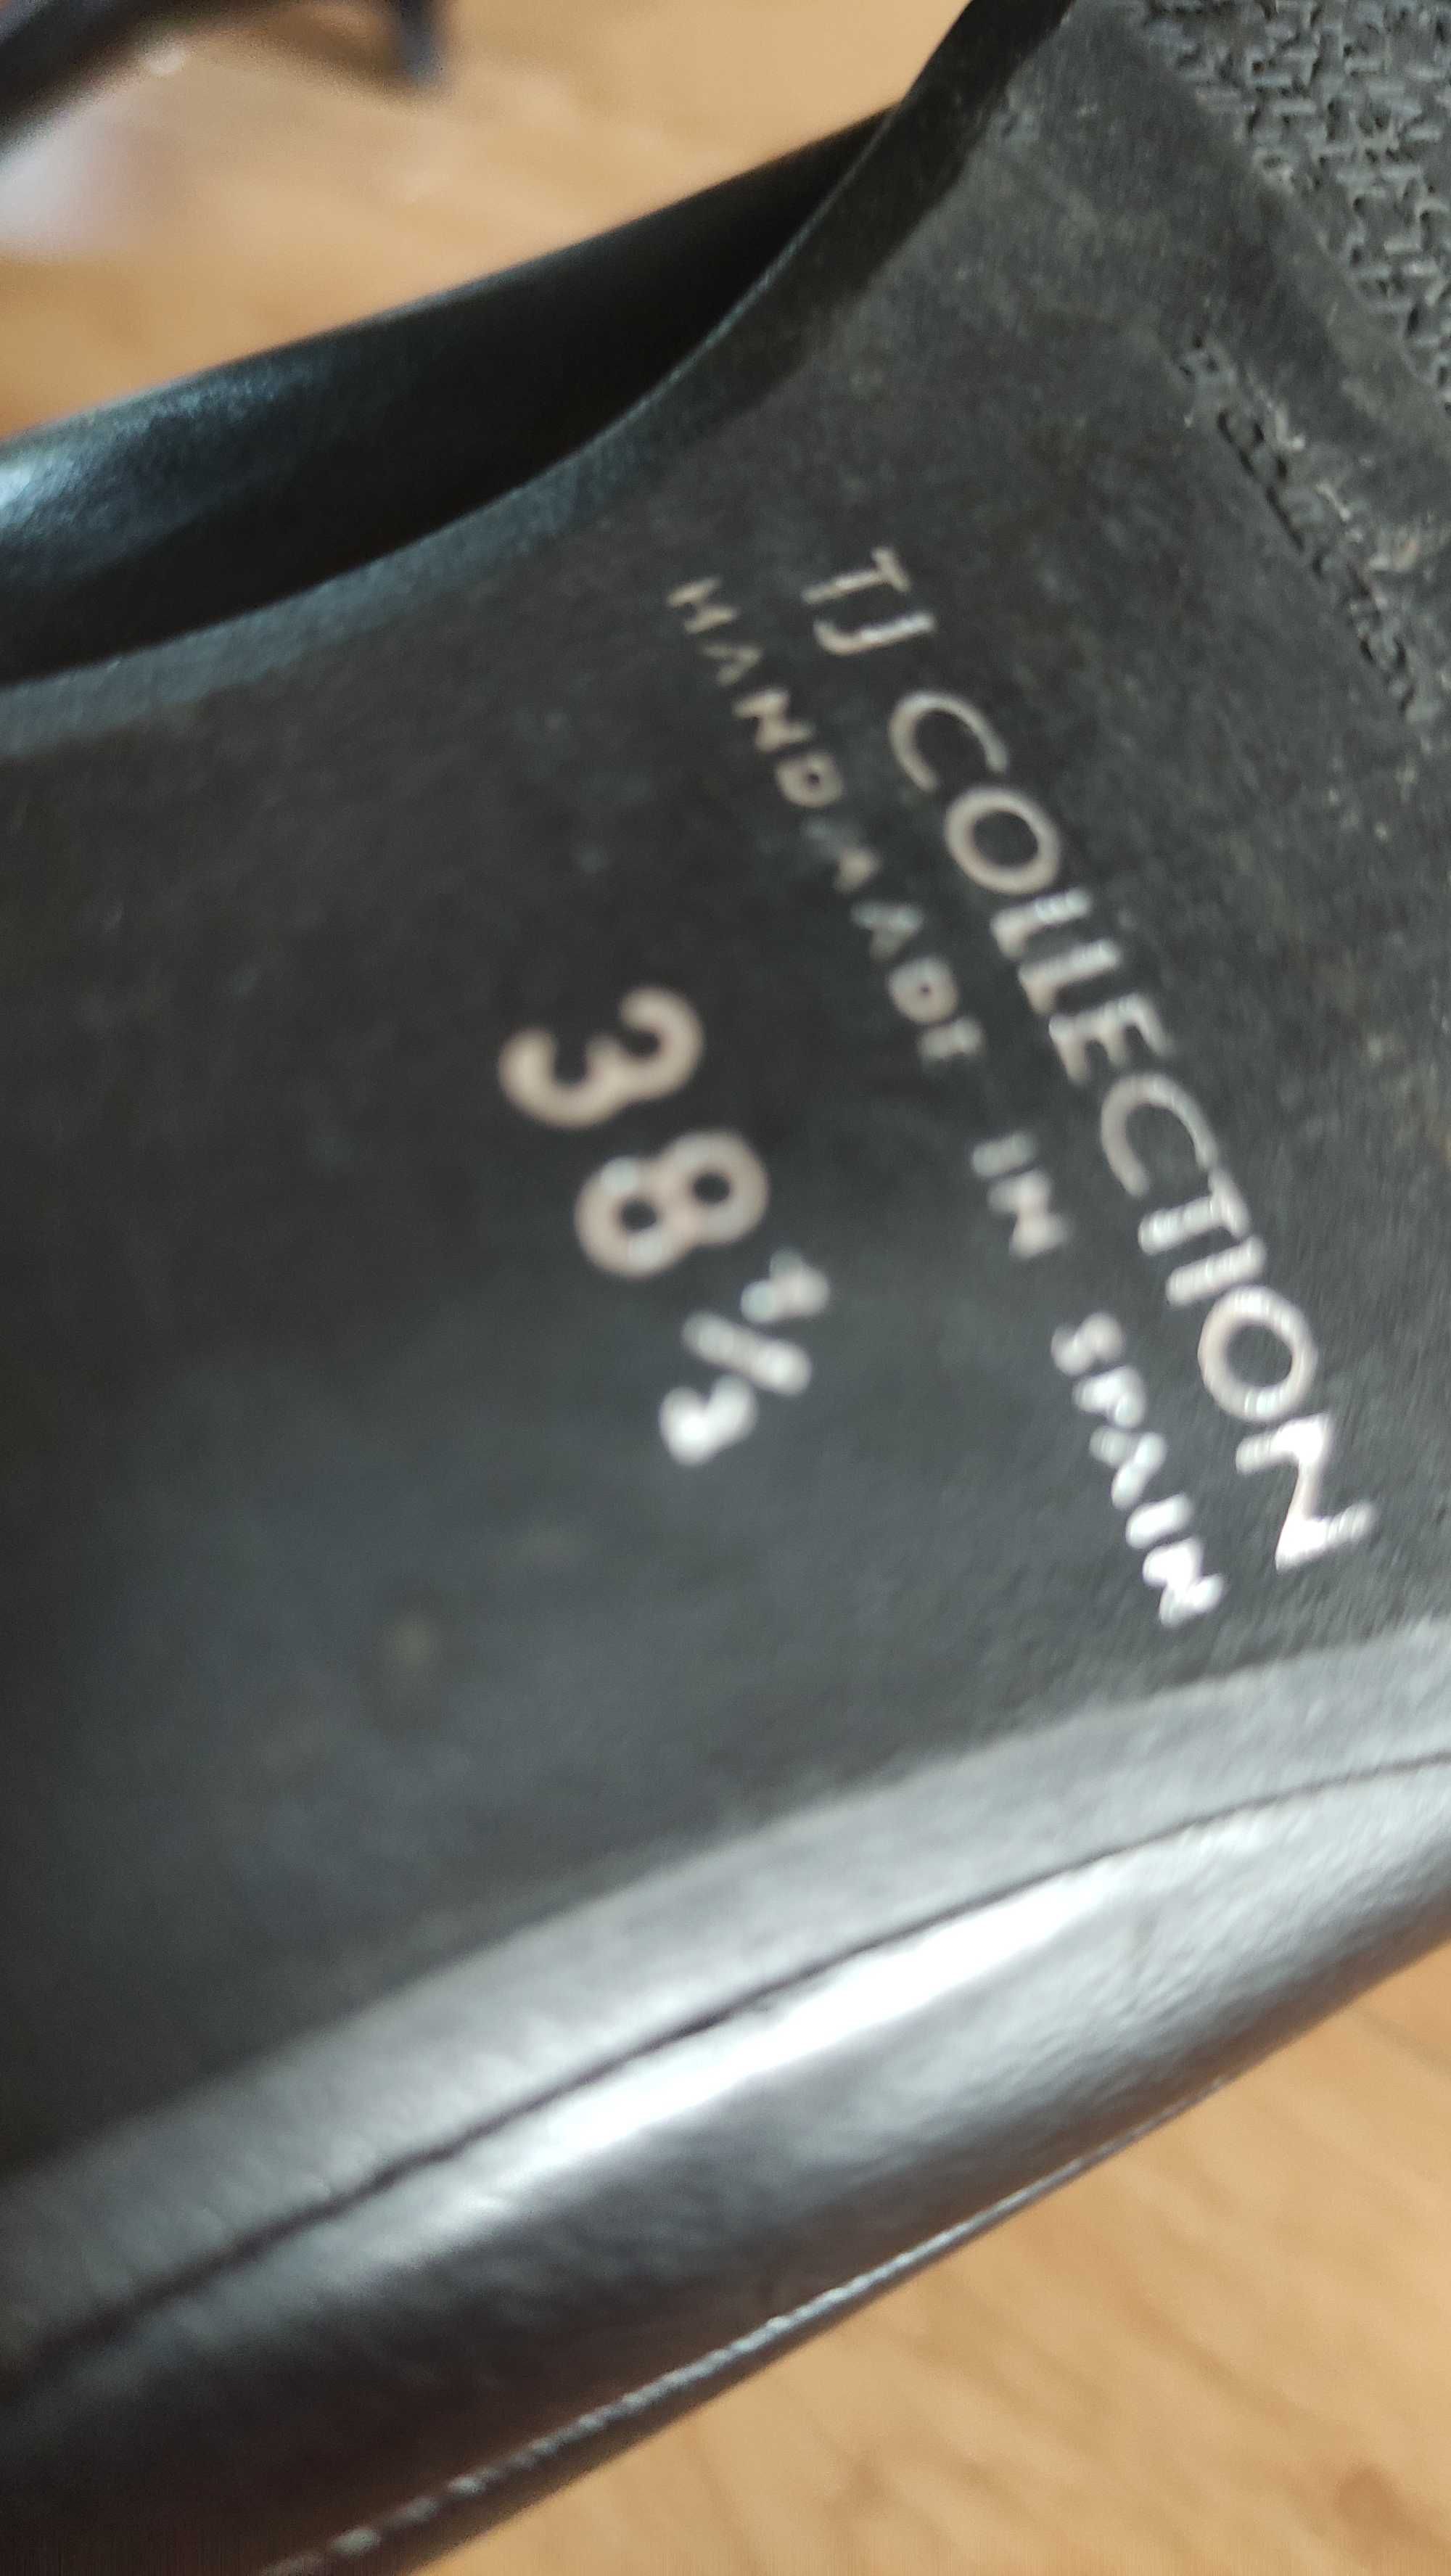 Pantofi din piele marca TJ collection, fabricati in Spania.